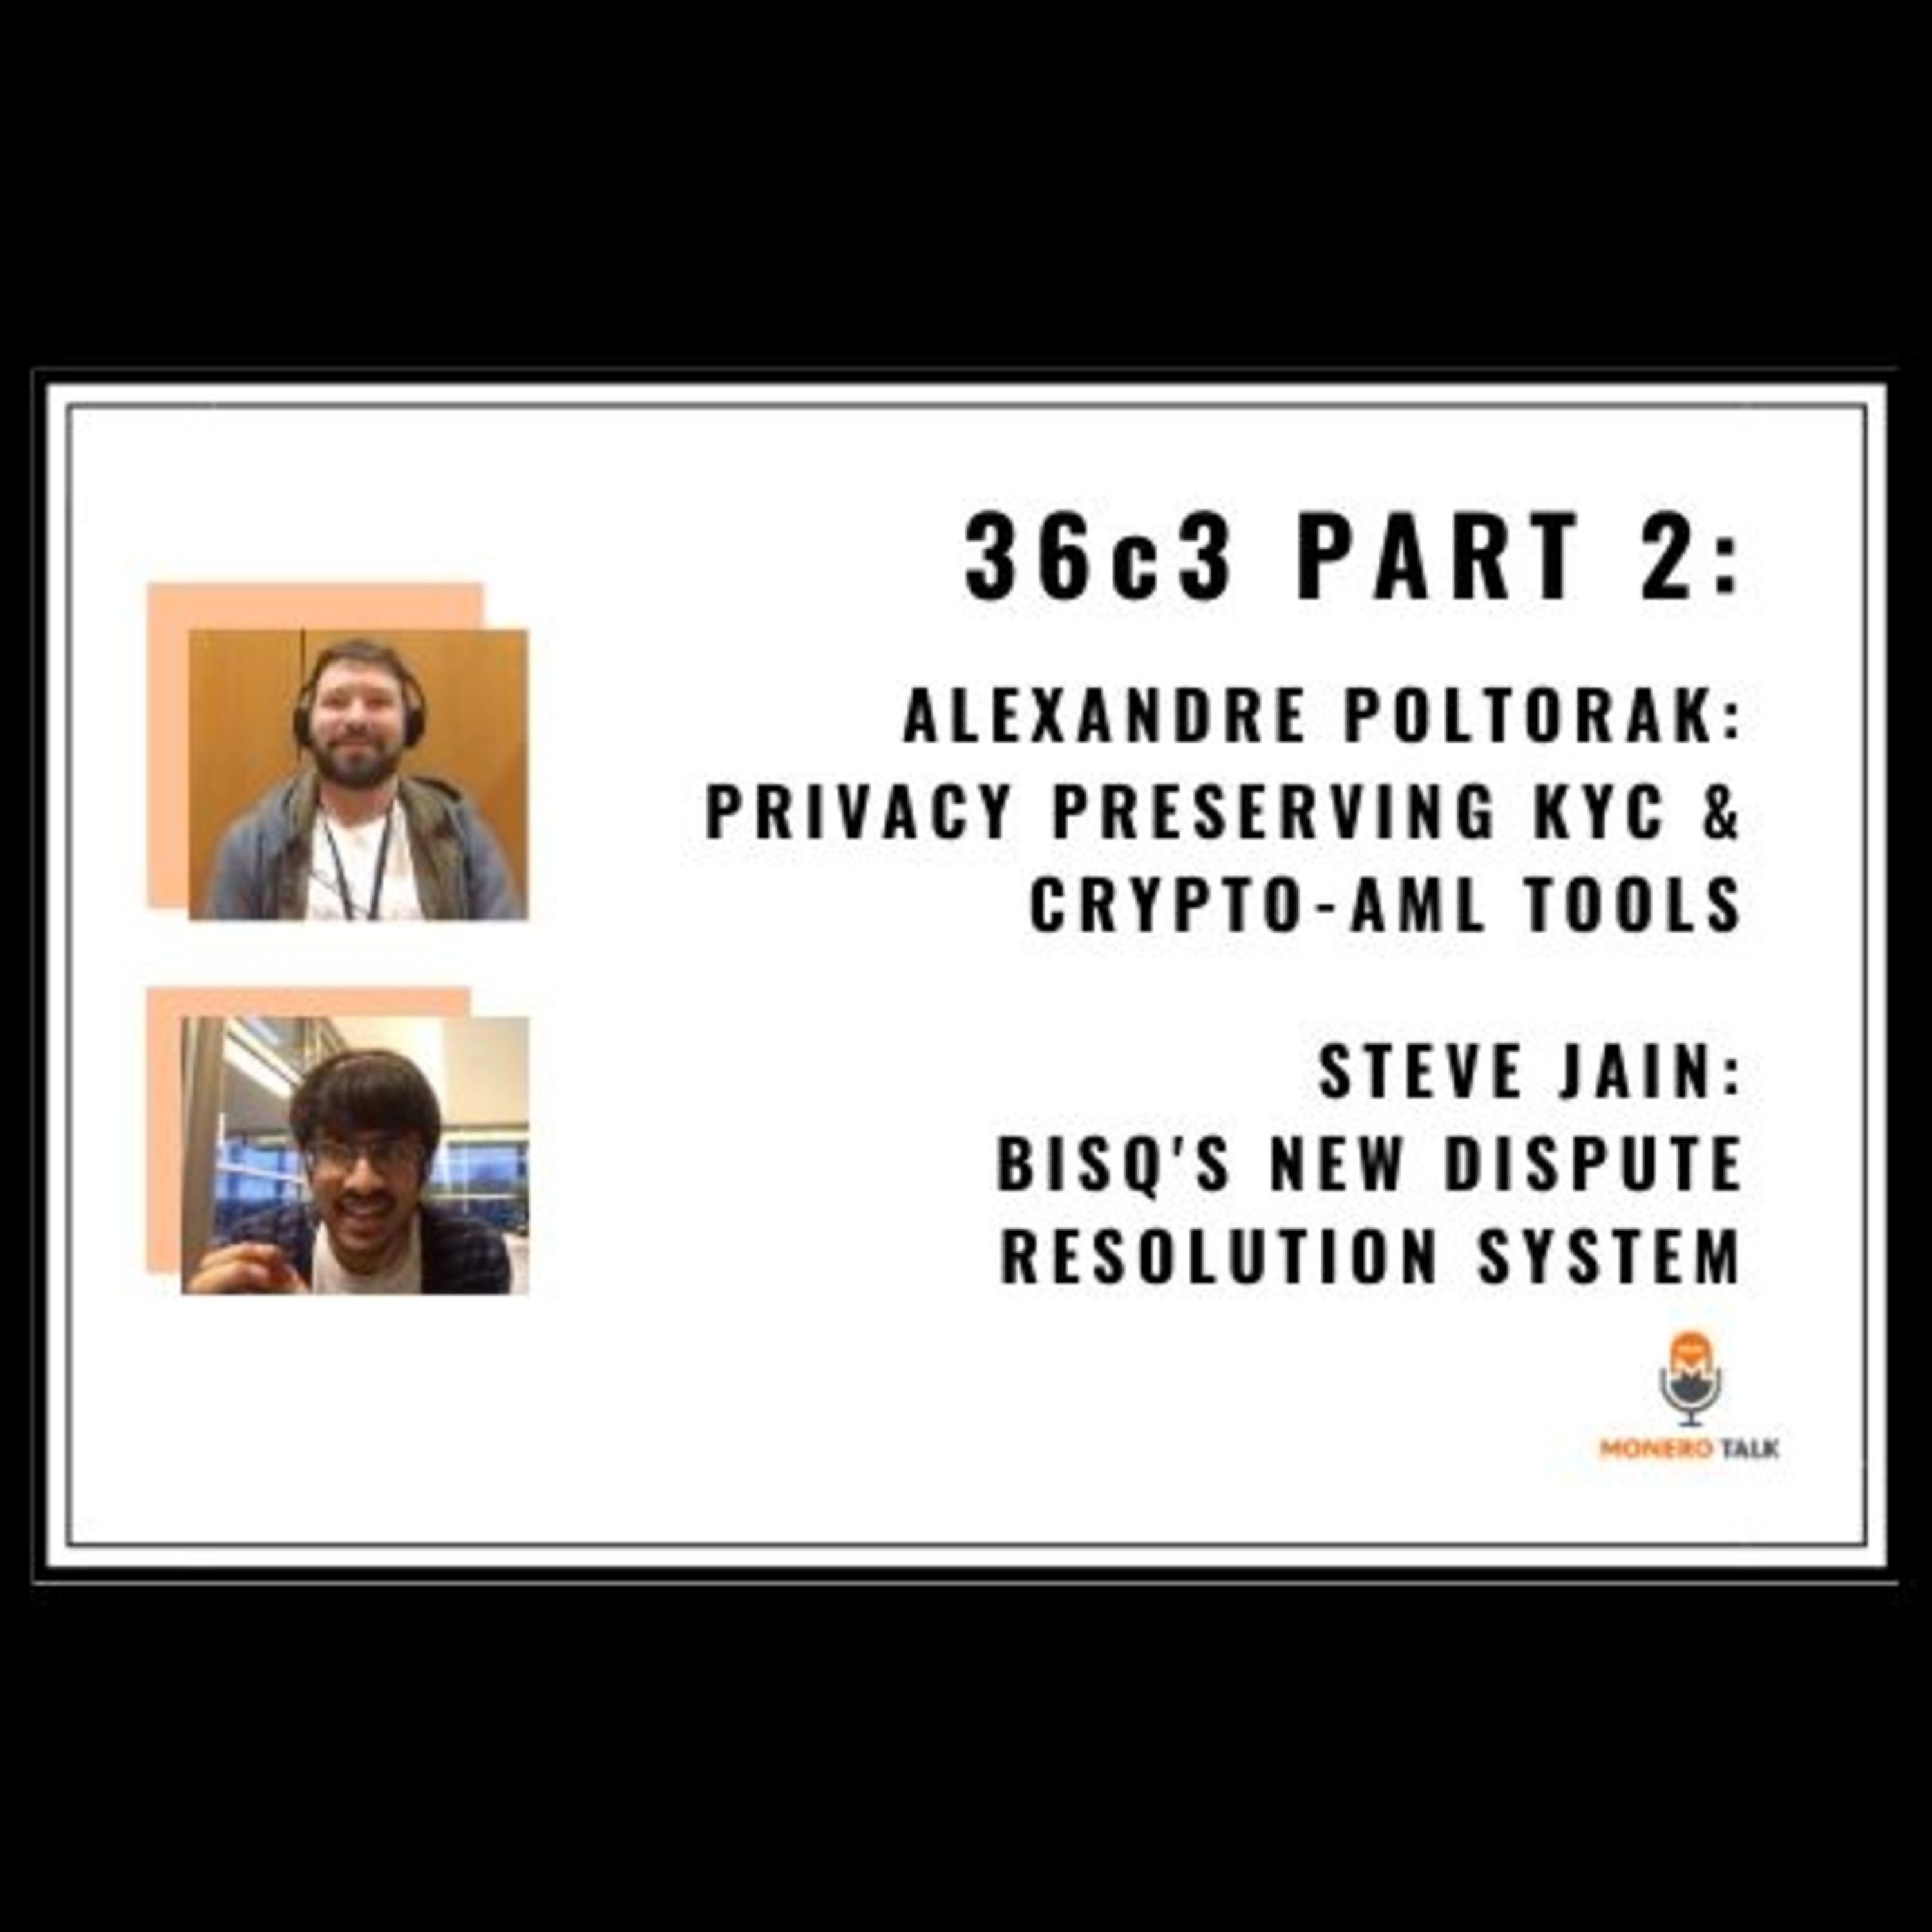 36C3 PART 2: Alexandre Poltorak and Steve Jain